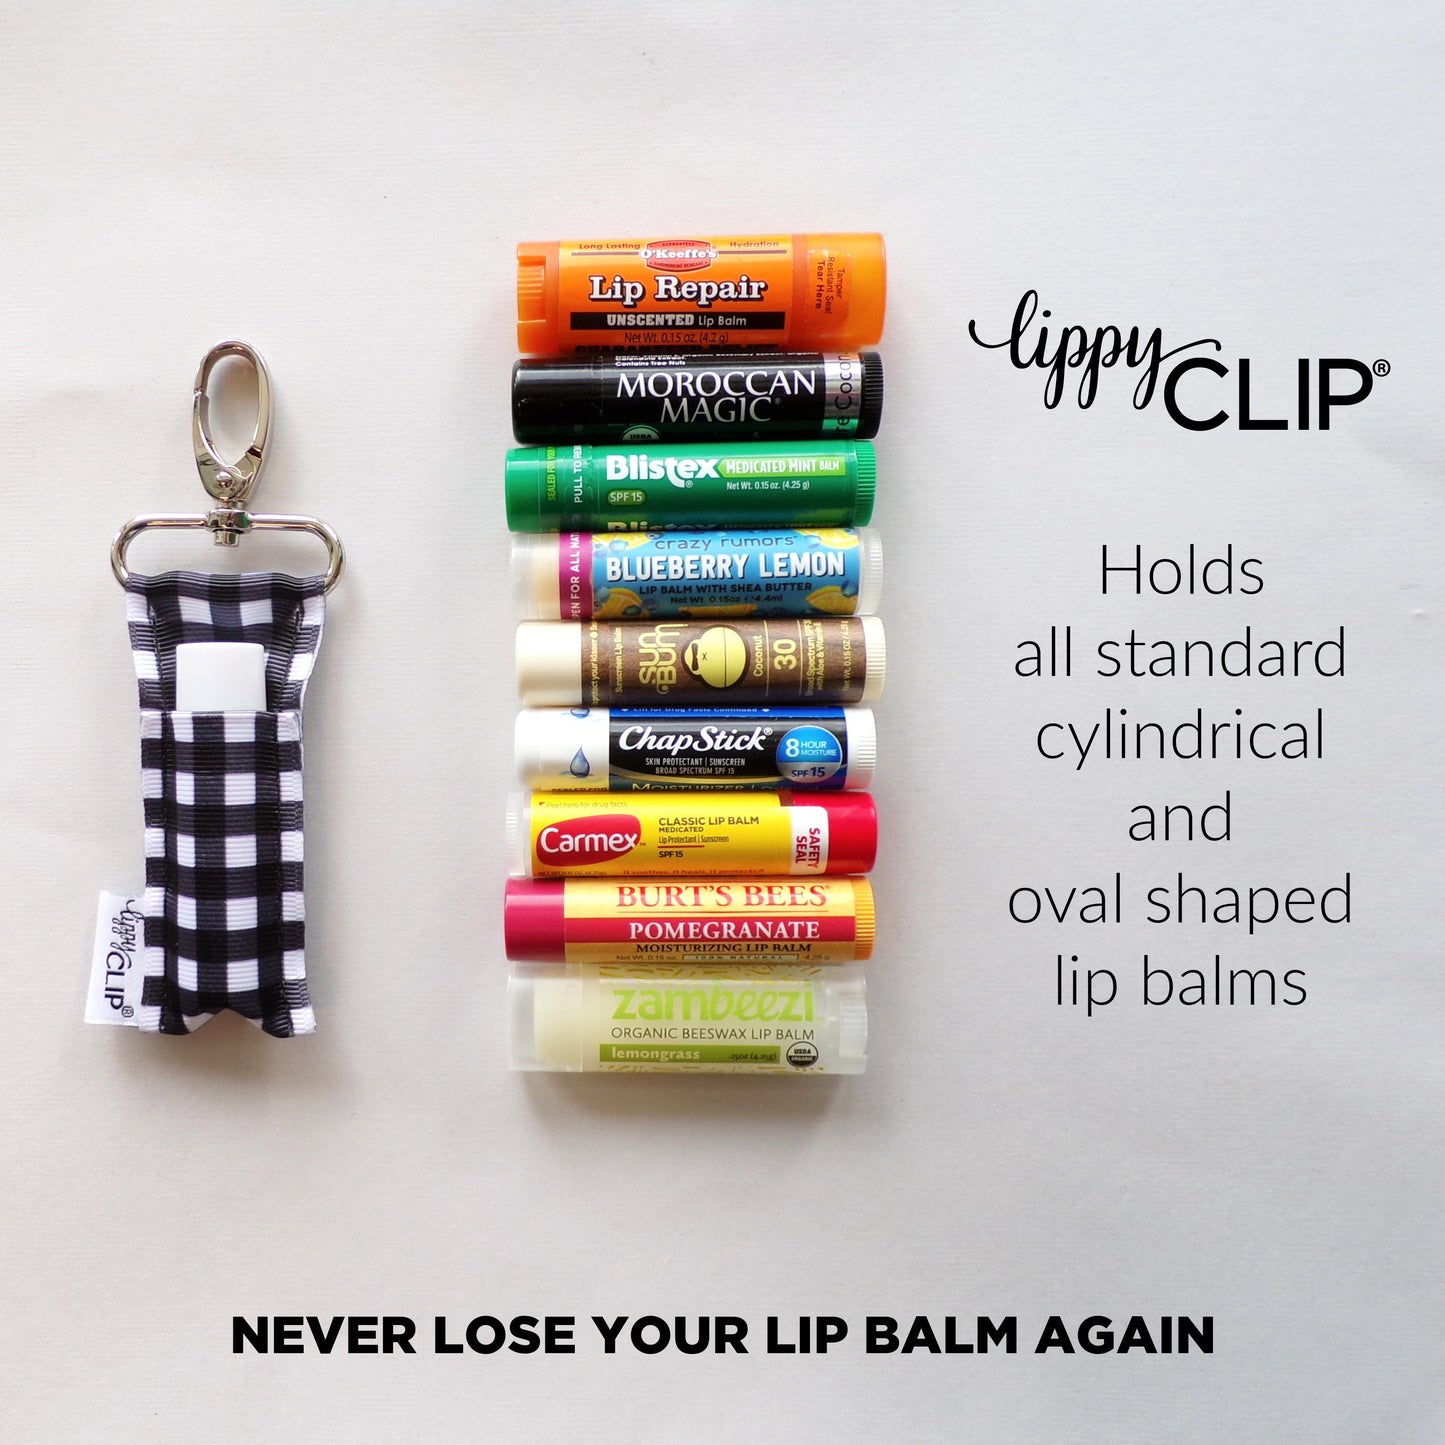 What a Catch LippyClip® Lip Balm Holder